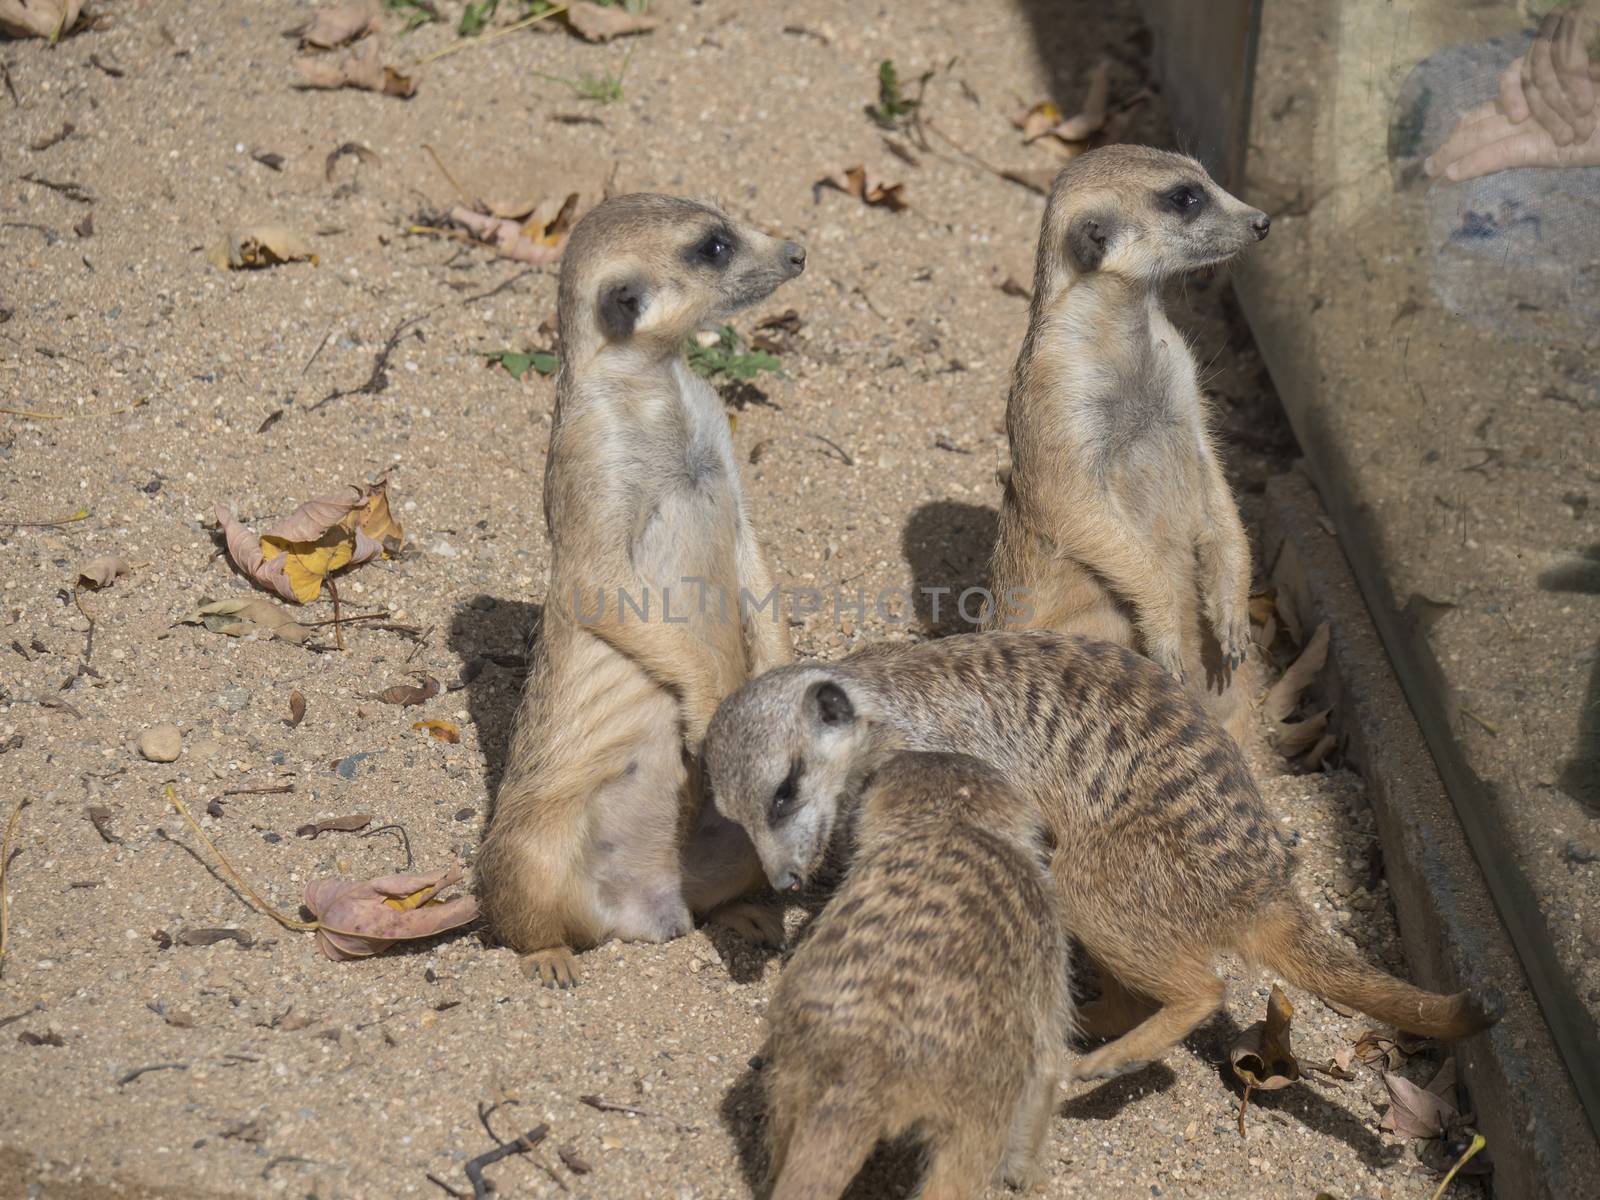 Group of meerkat or suricates, Suricata suricatta looking on visitors at zoo behind the glass by Henkeova